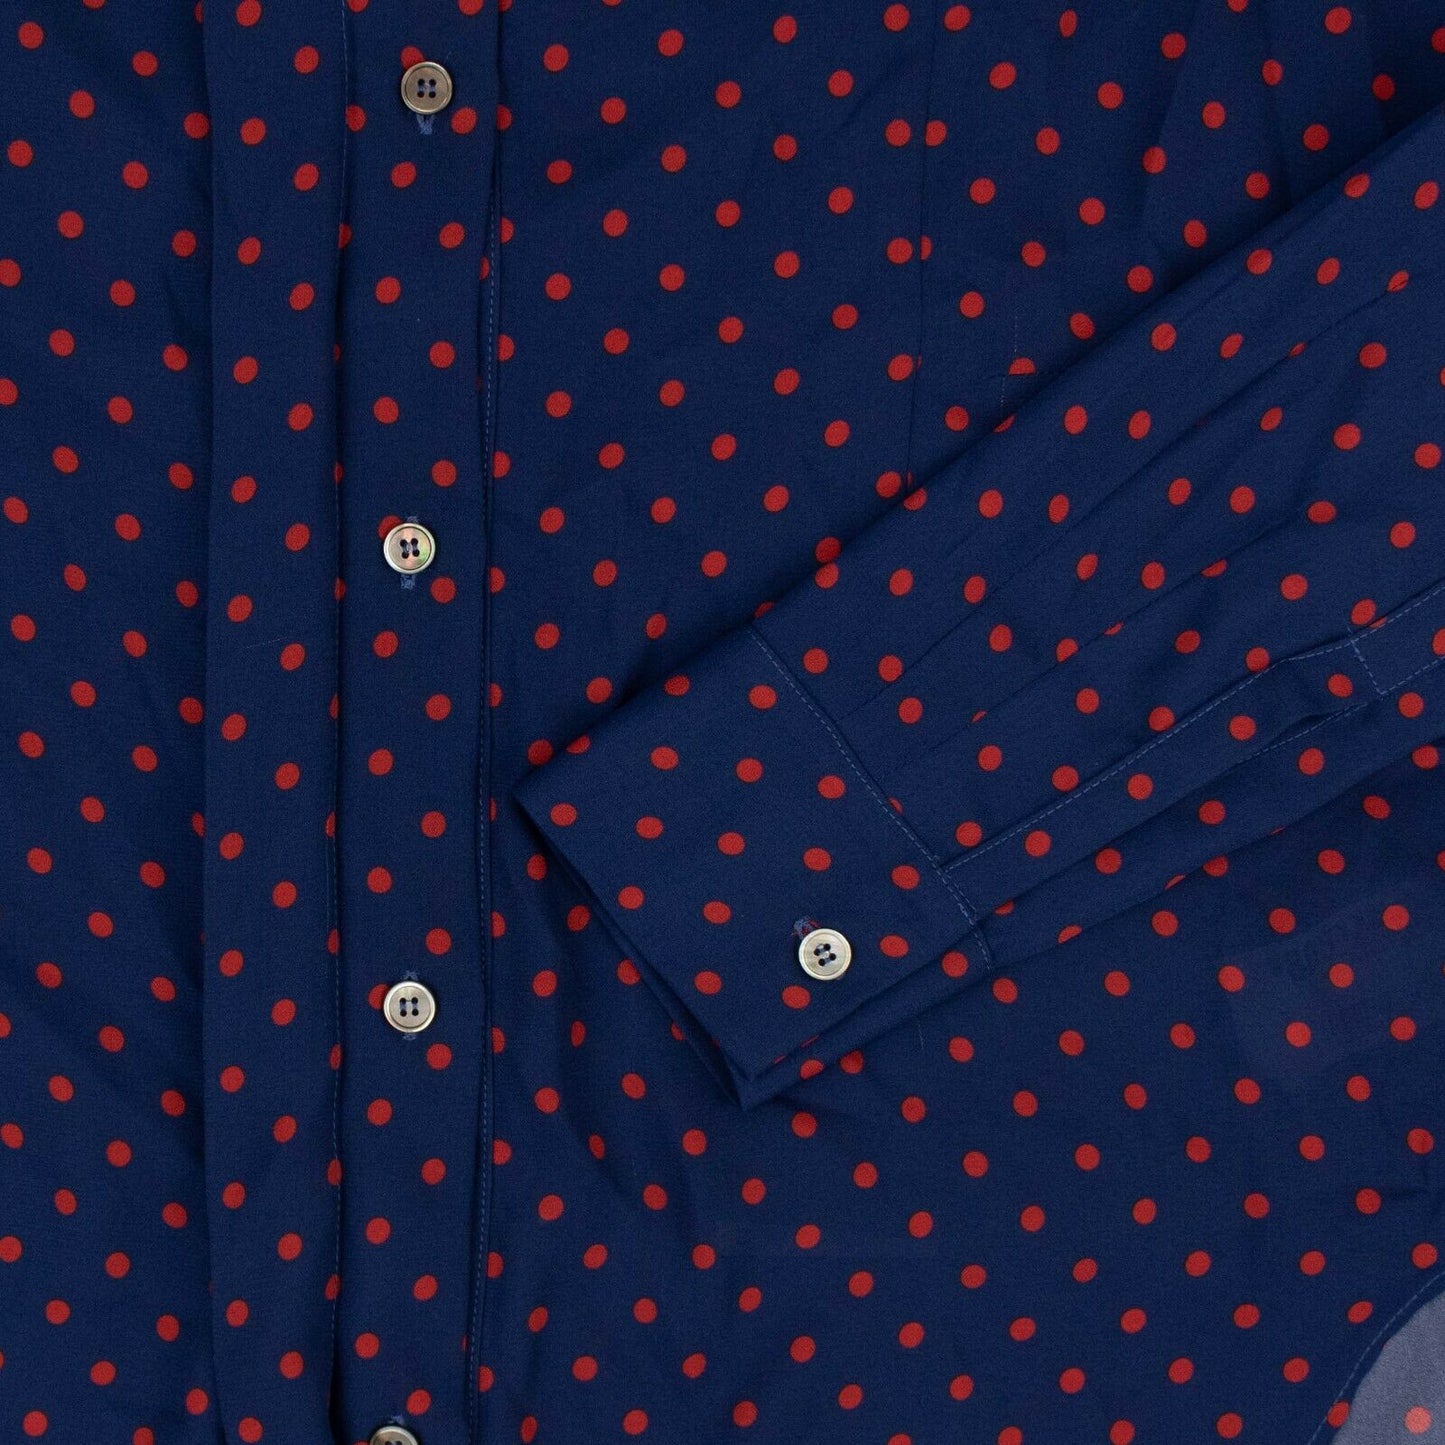 Unravel Project Polka Dot Shirt - Dark Blue/Red